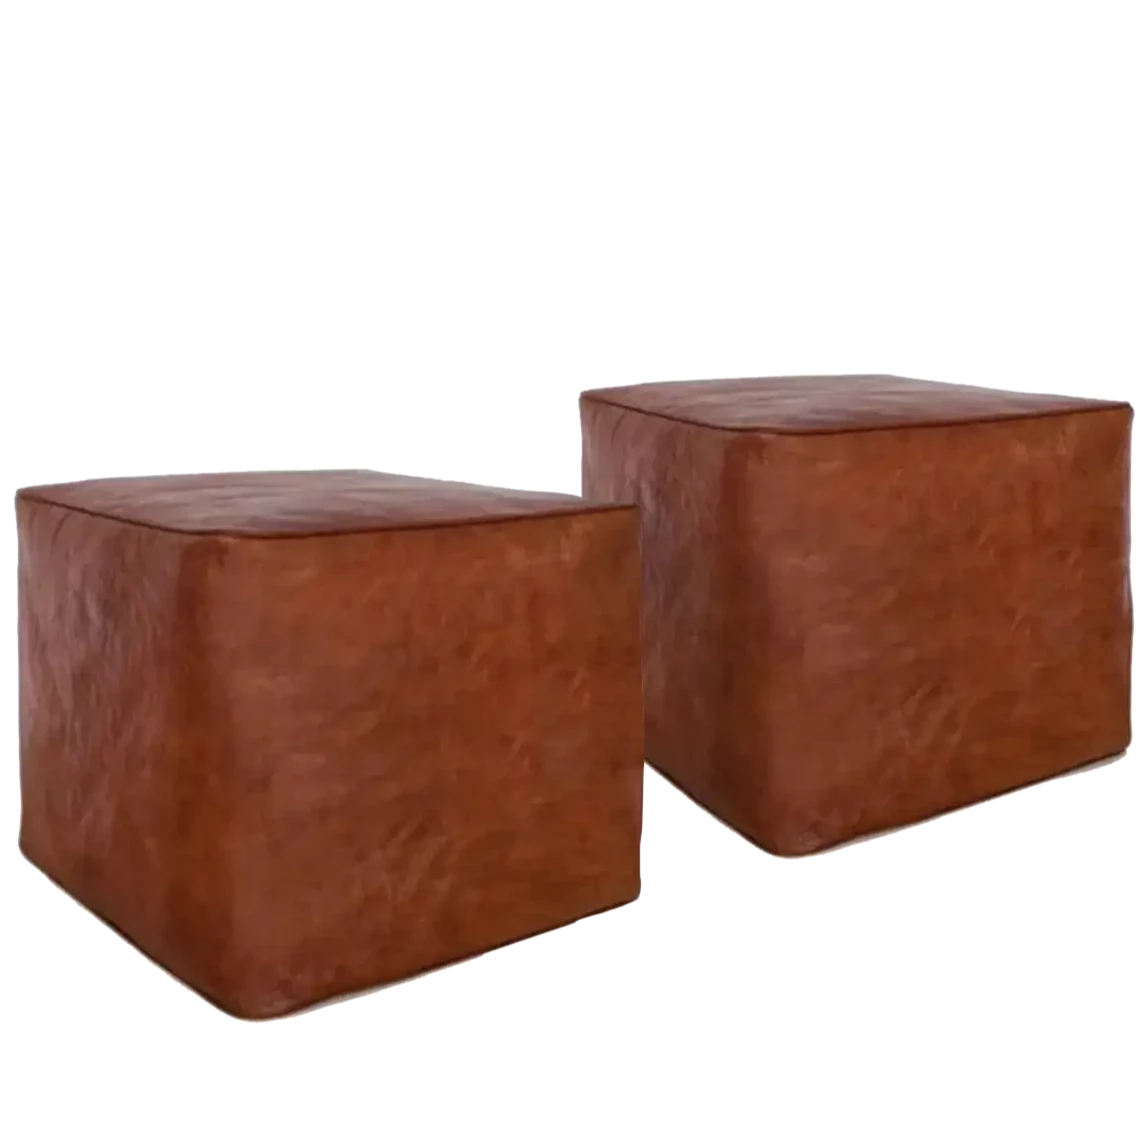 Dounia home pouf  made of Leather, Model: IDRA